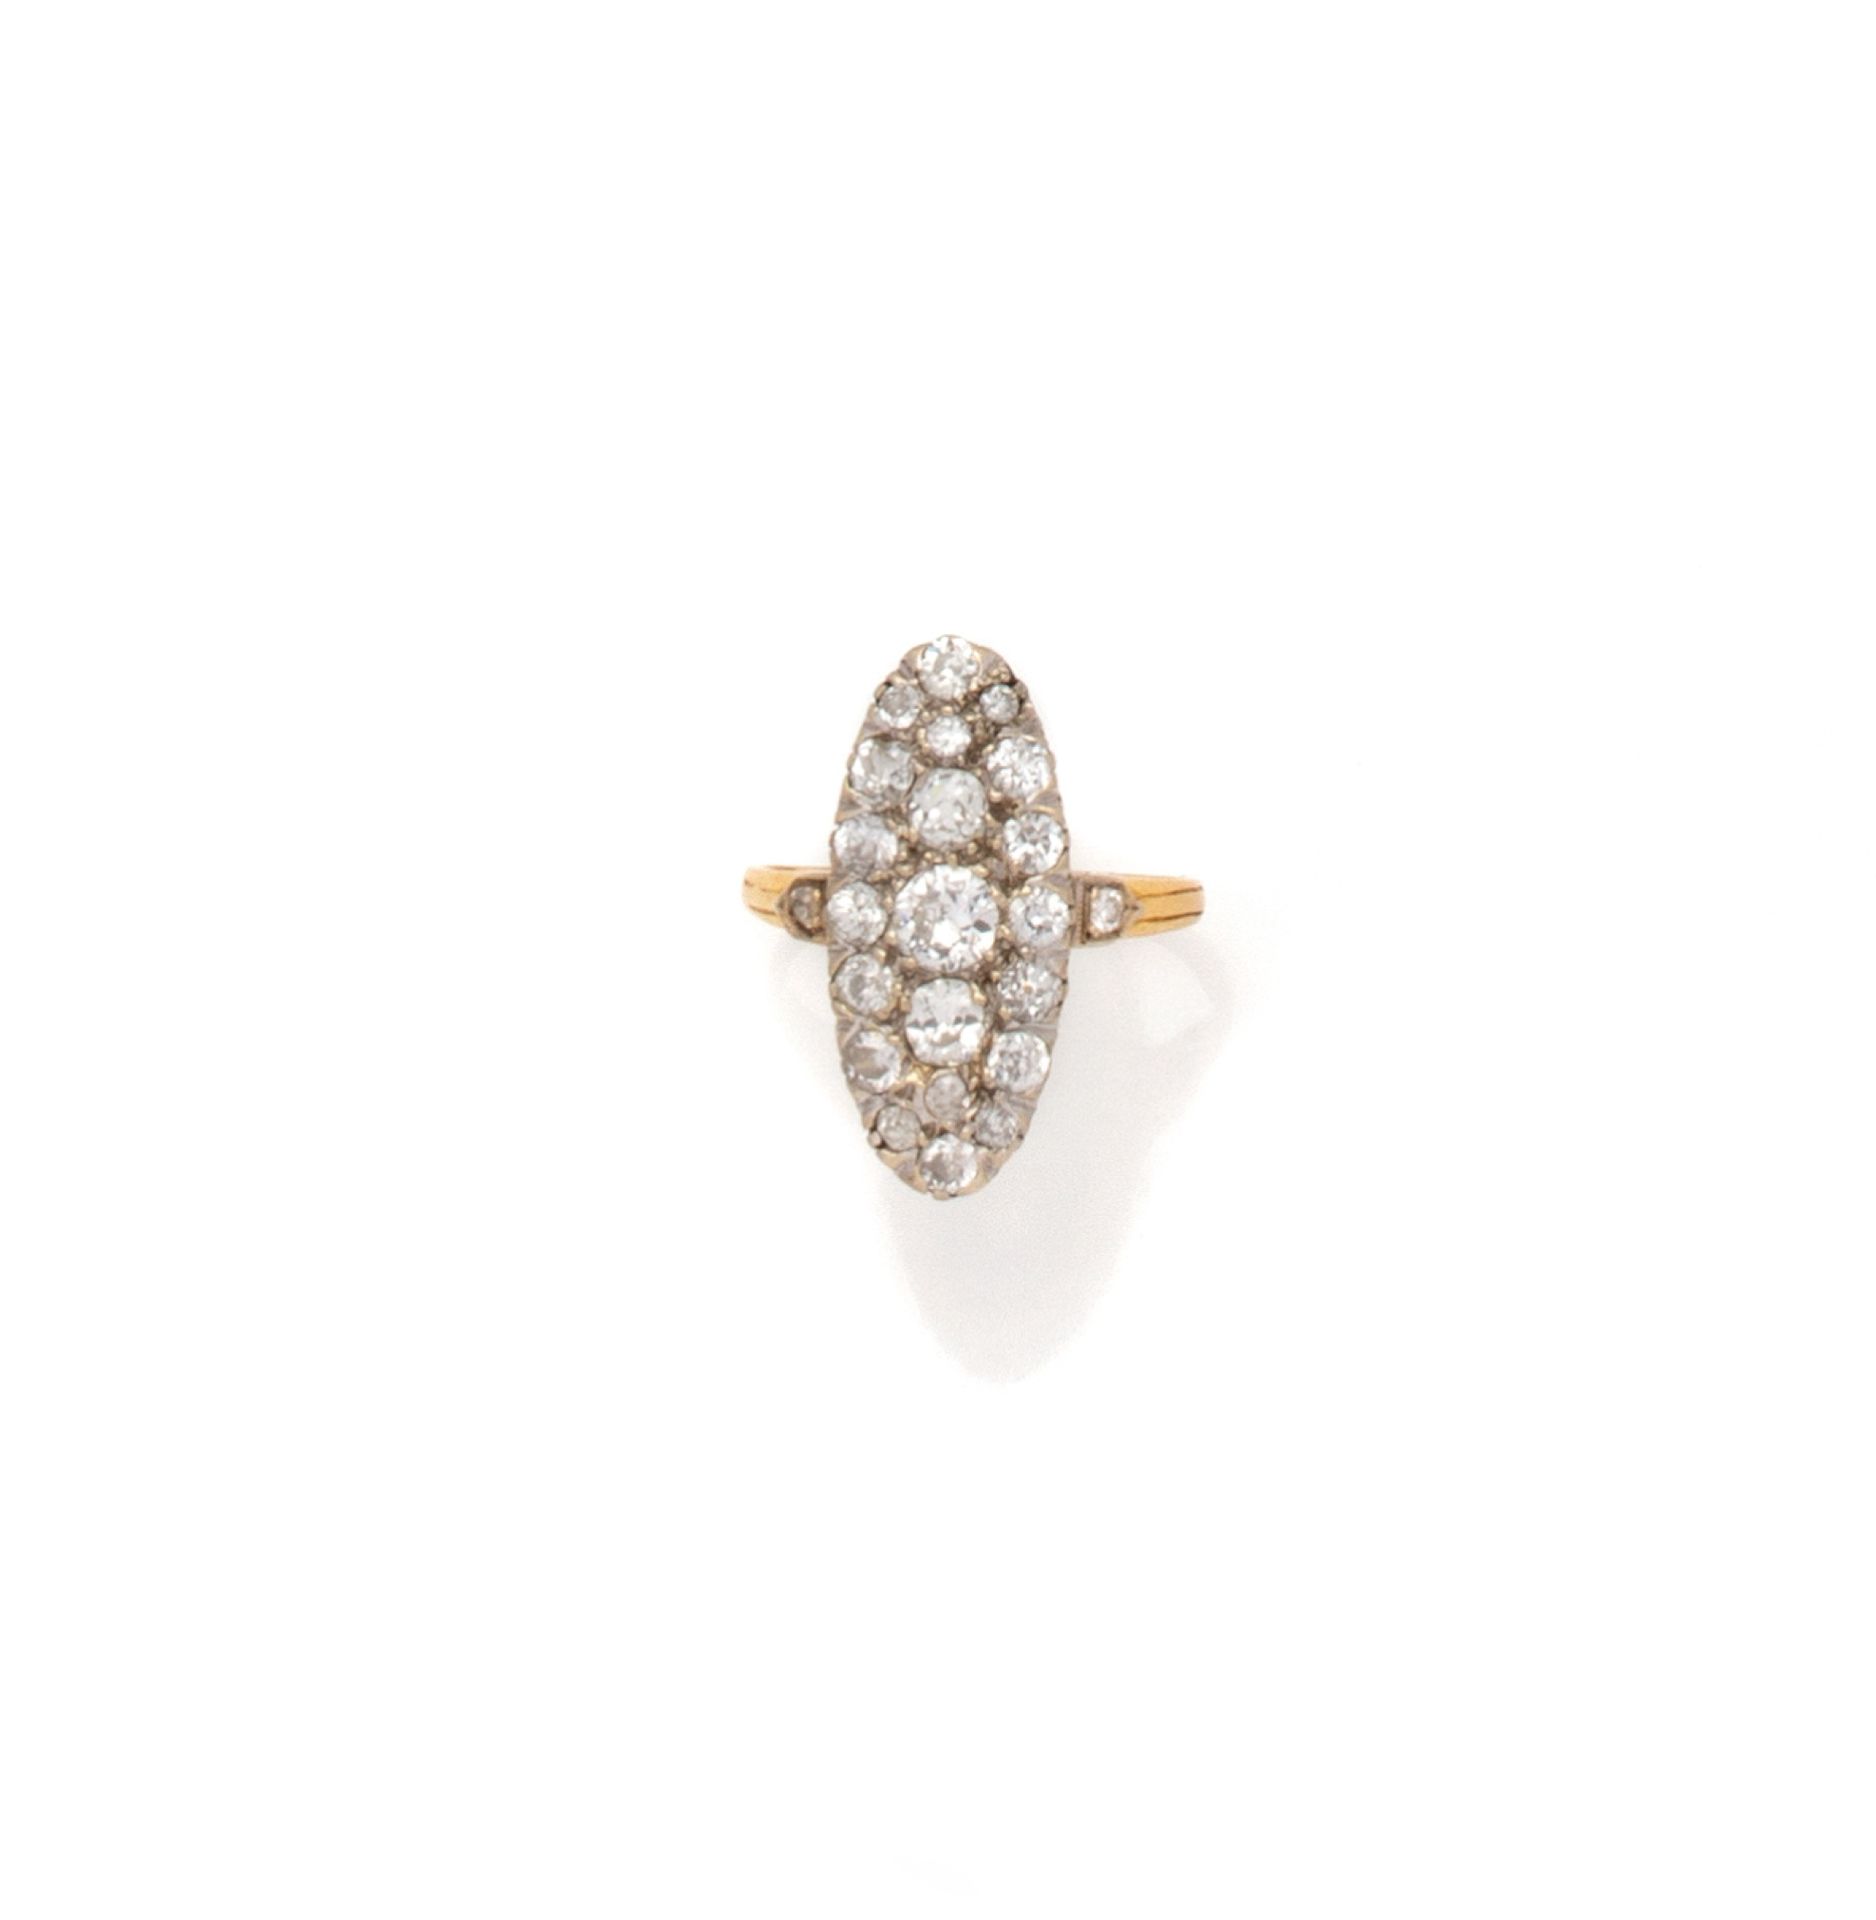 Null 双色18K(750/1000)金榄尖形戒指，以5颗下降的枕形切割钻石为中心，周围有16颗老式切割钻石和亮片。

法国作品，并有印记的痕迹。

手指大小&hellip;